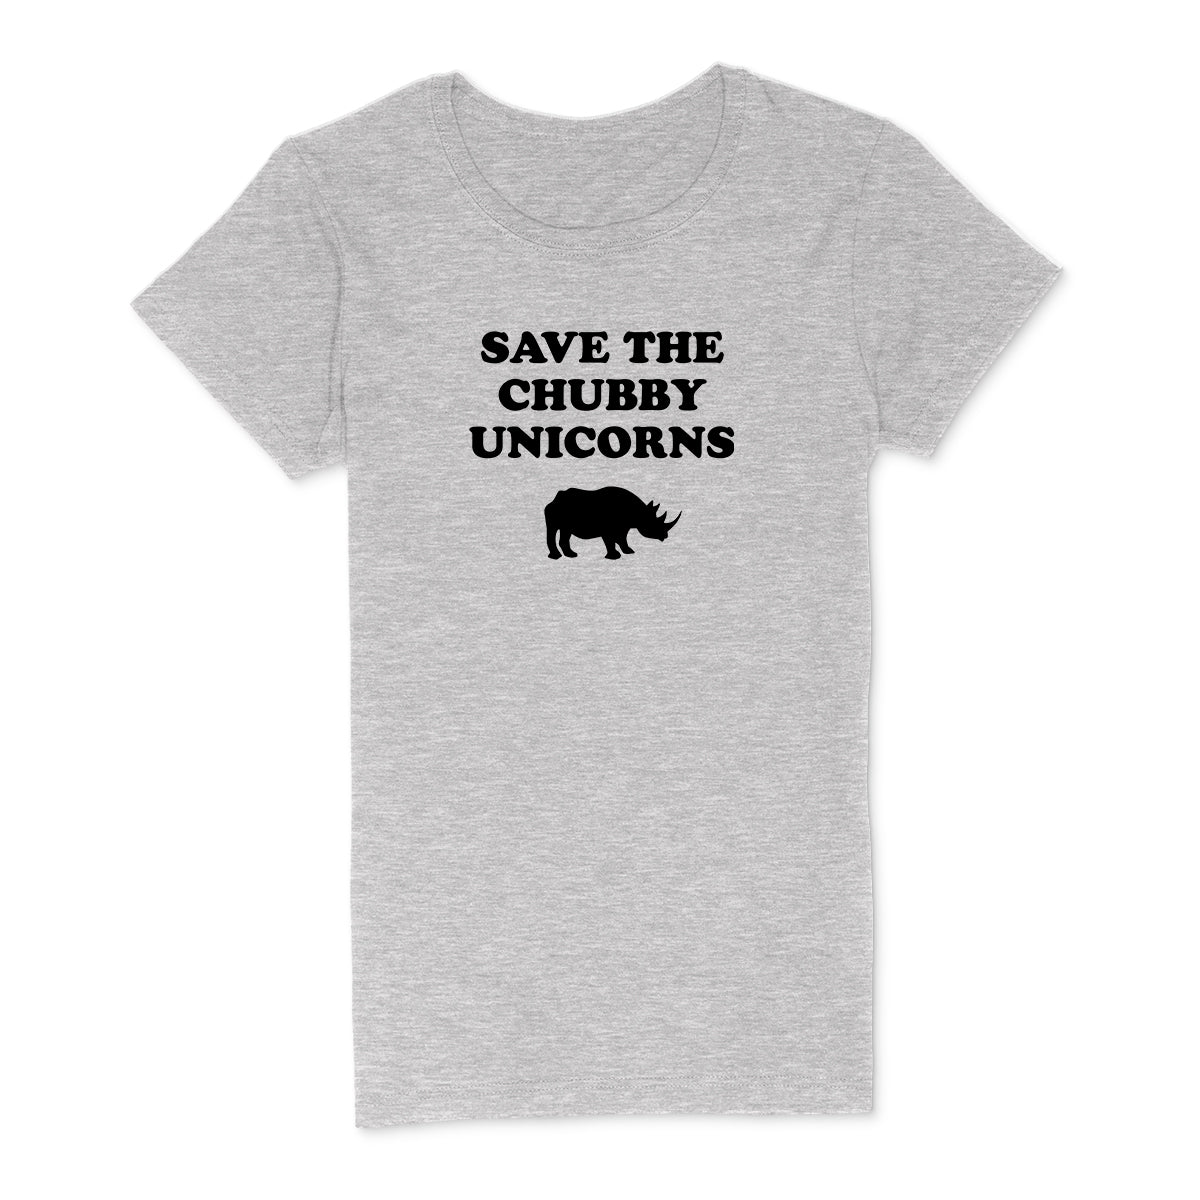 "Save The Chubby Unicorns" Premium Midweight Ringspun Cotton T-Shirt - Mens/Womens Fits